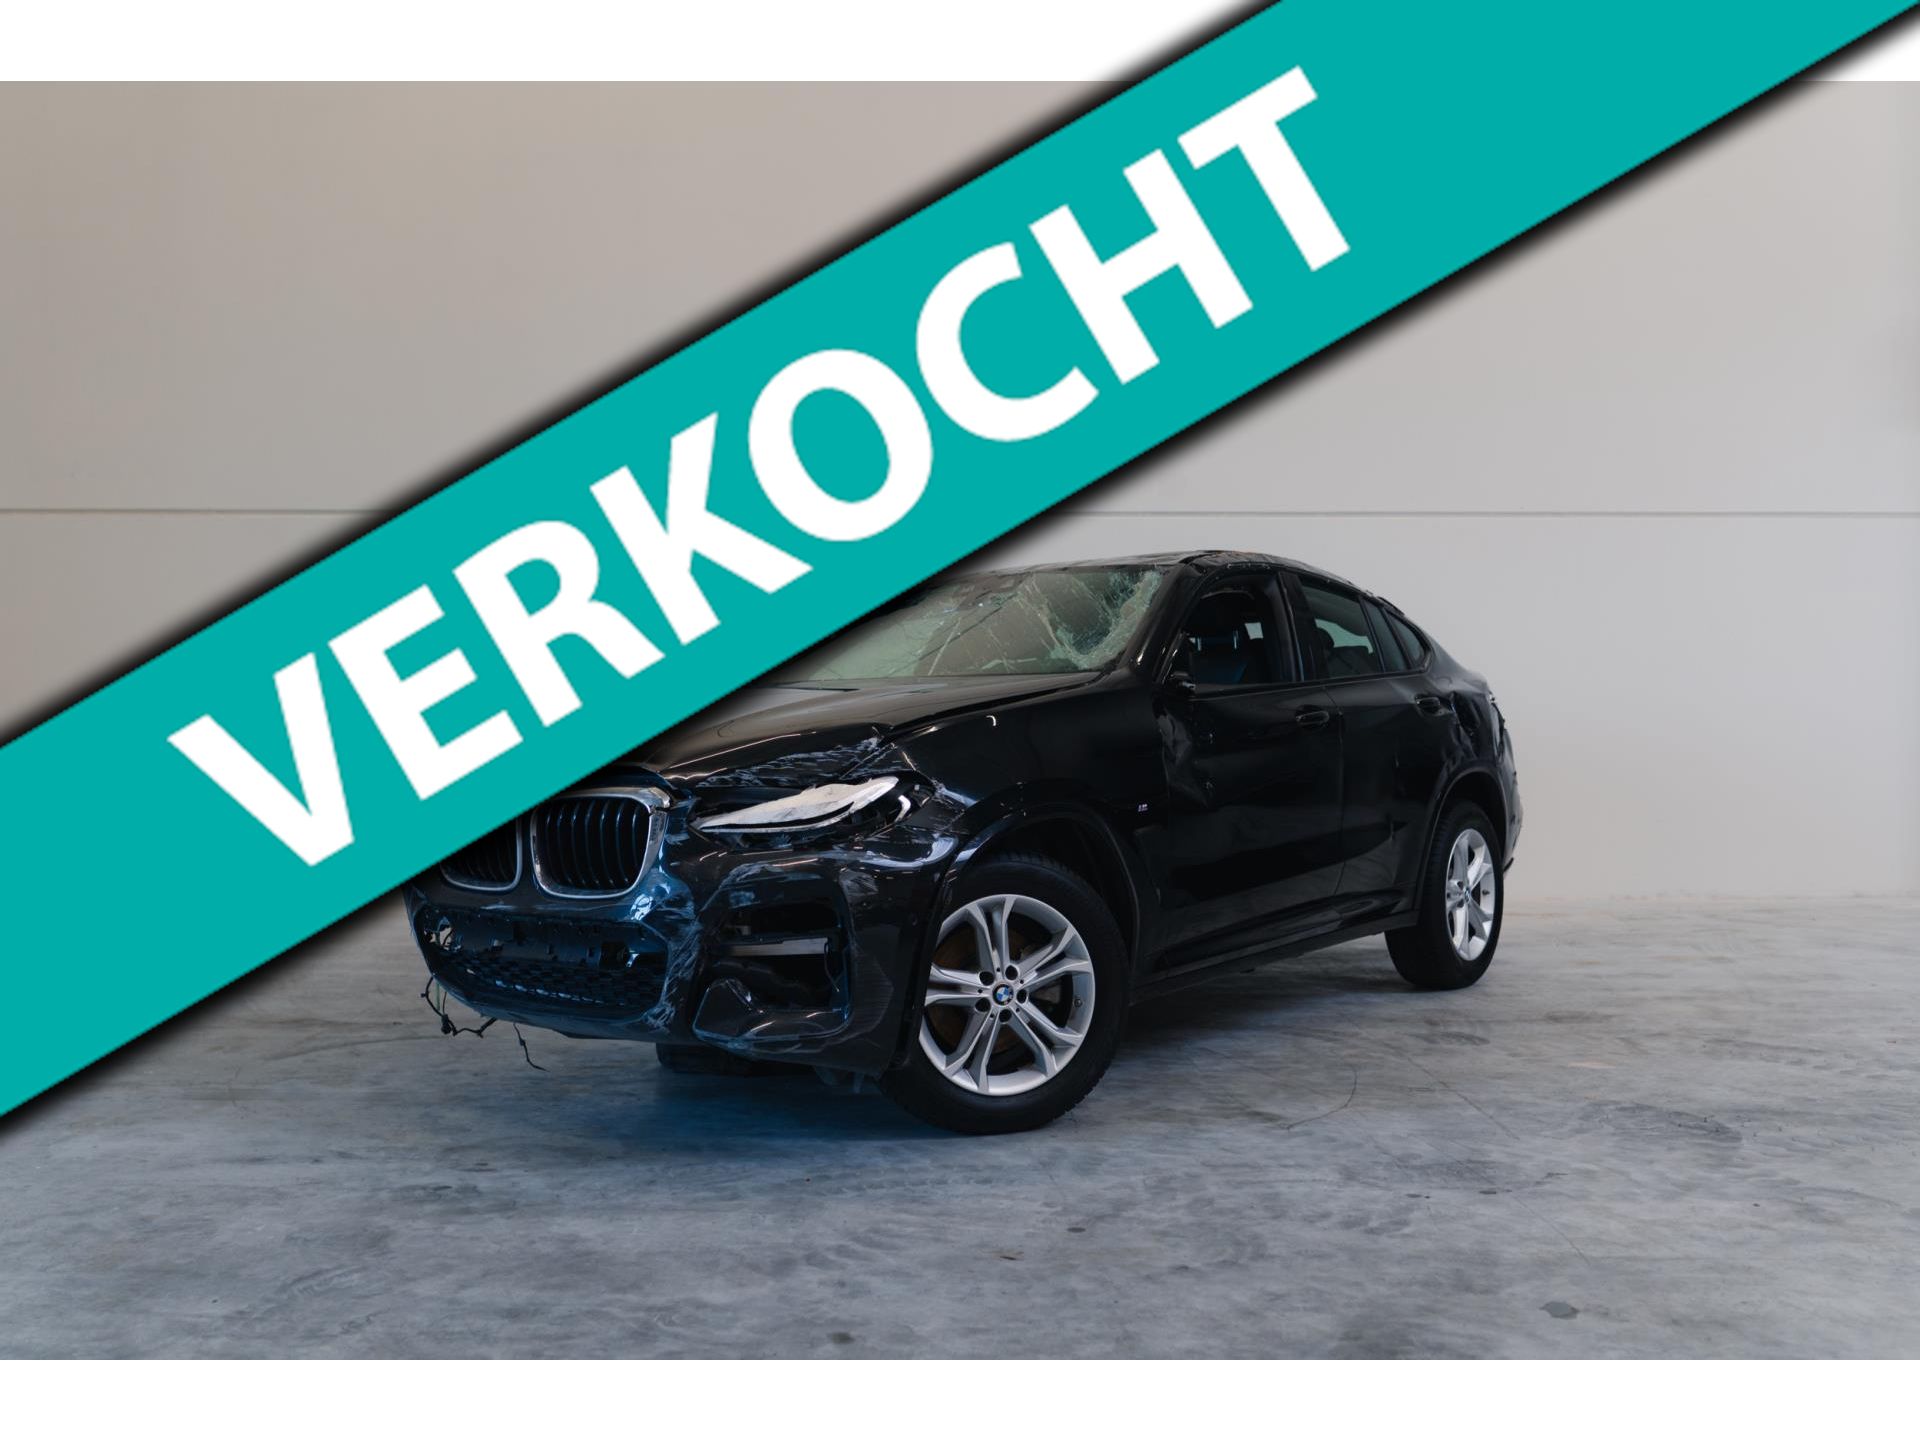 BMW X4 XDrive20i M Sport High new model 2021 Executive Edition 184 pk inruil mogelijk SUV | 19.027 km | 2021 | 184 pk